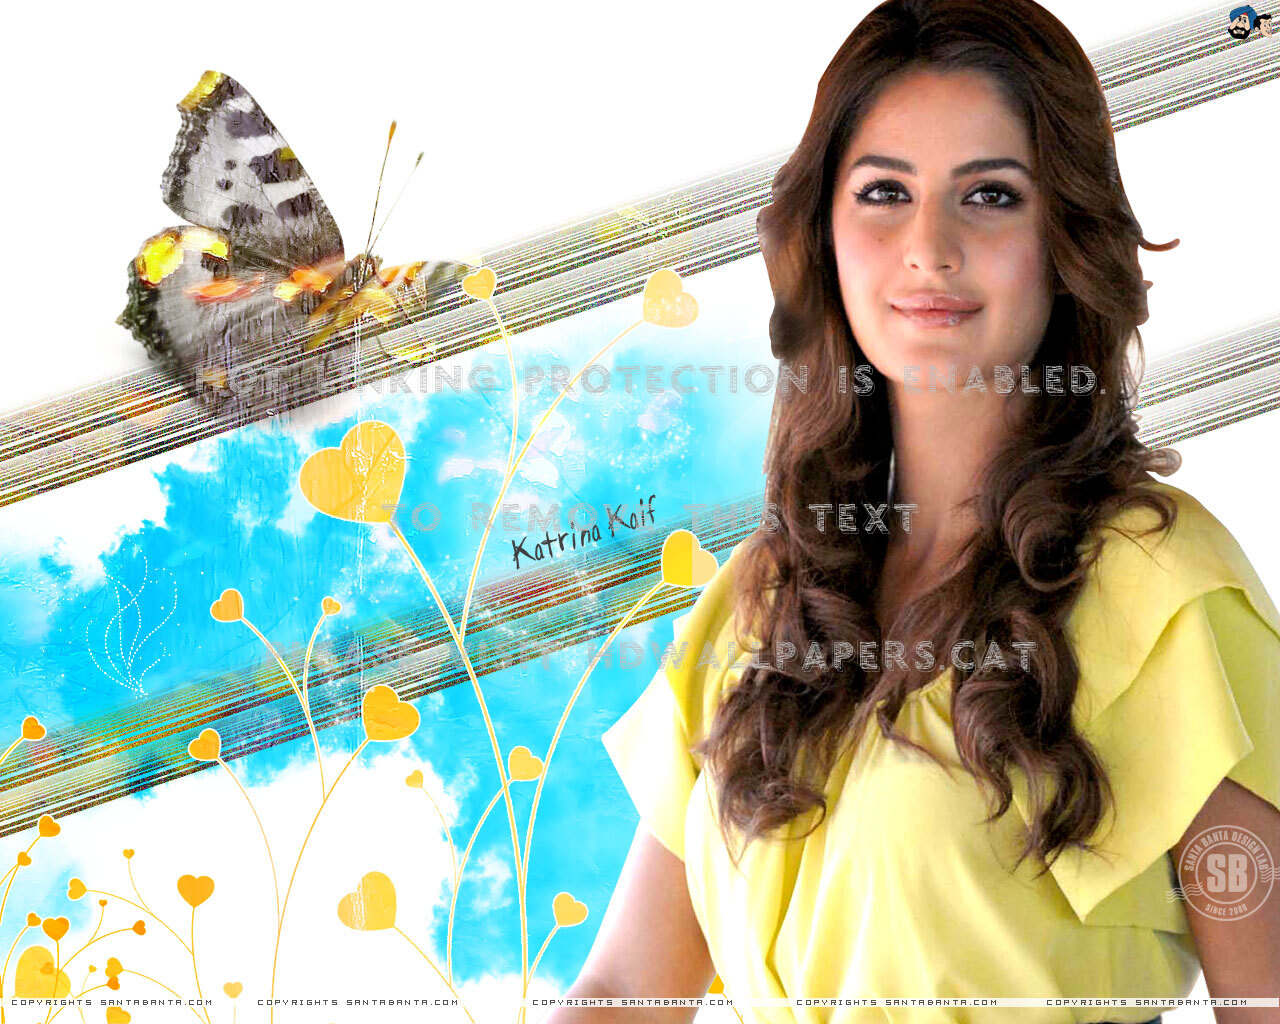 Nice Dd Rr Cc Ee People Actresses - New Wallpapers Of Katrina Kaif -  1280x1024 Wallpaper 